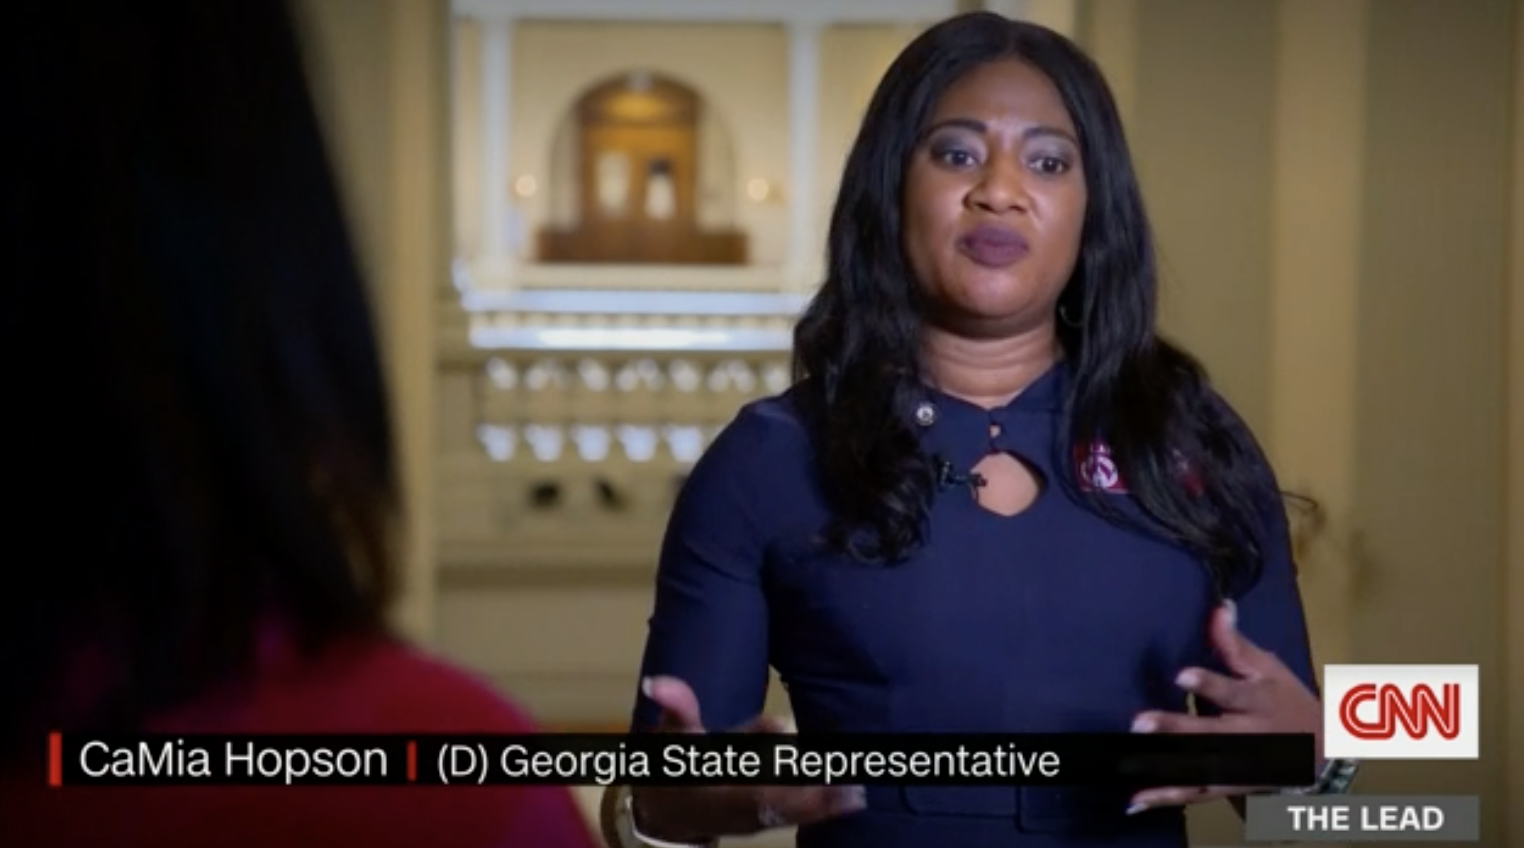 Georgia state Rep. CaMia Hopson appears on CNN.